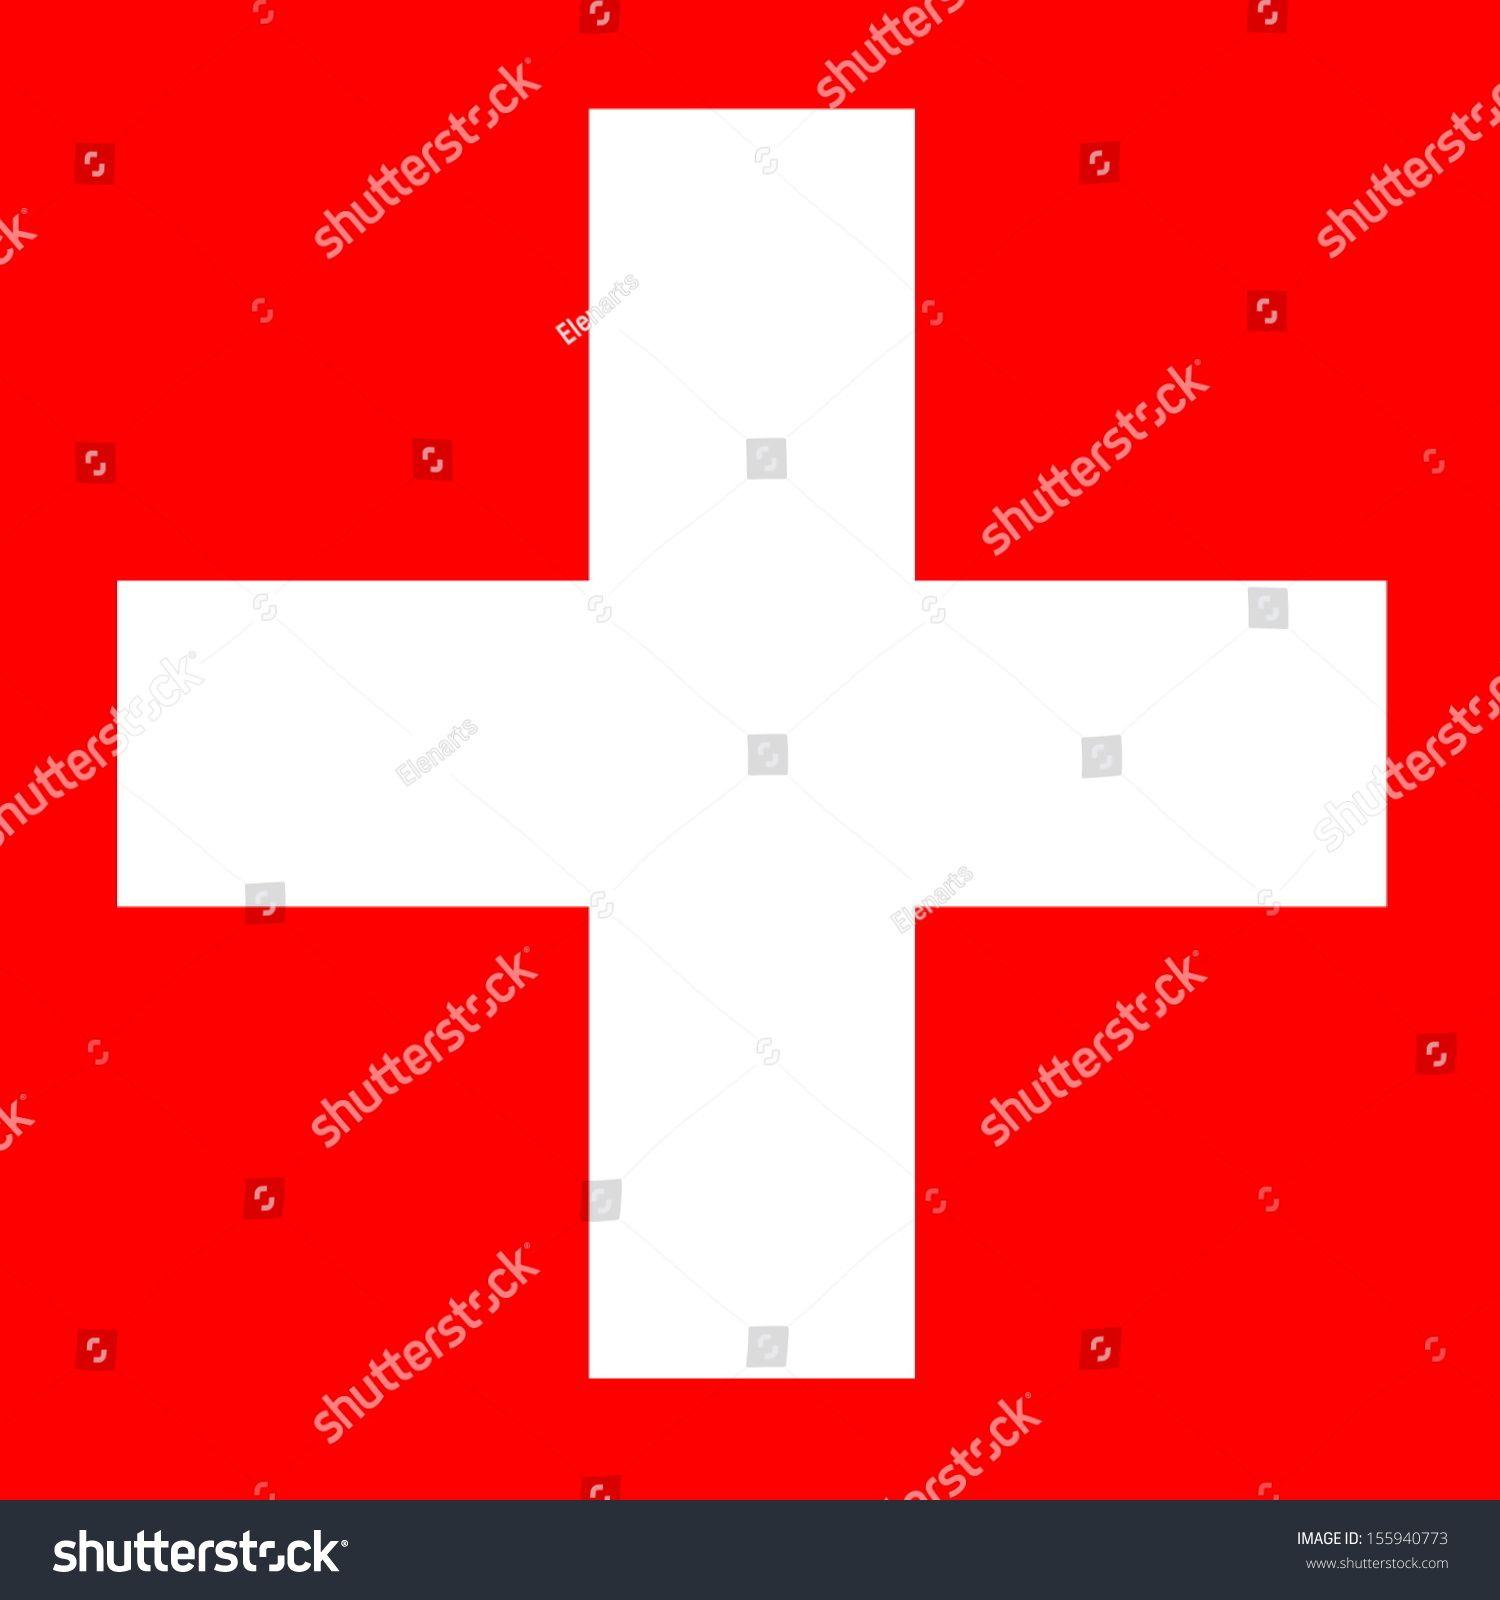 Cross Red Background Logo - Red square white cross Logos